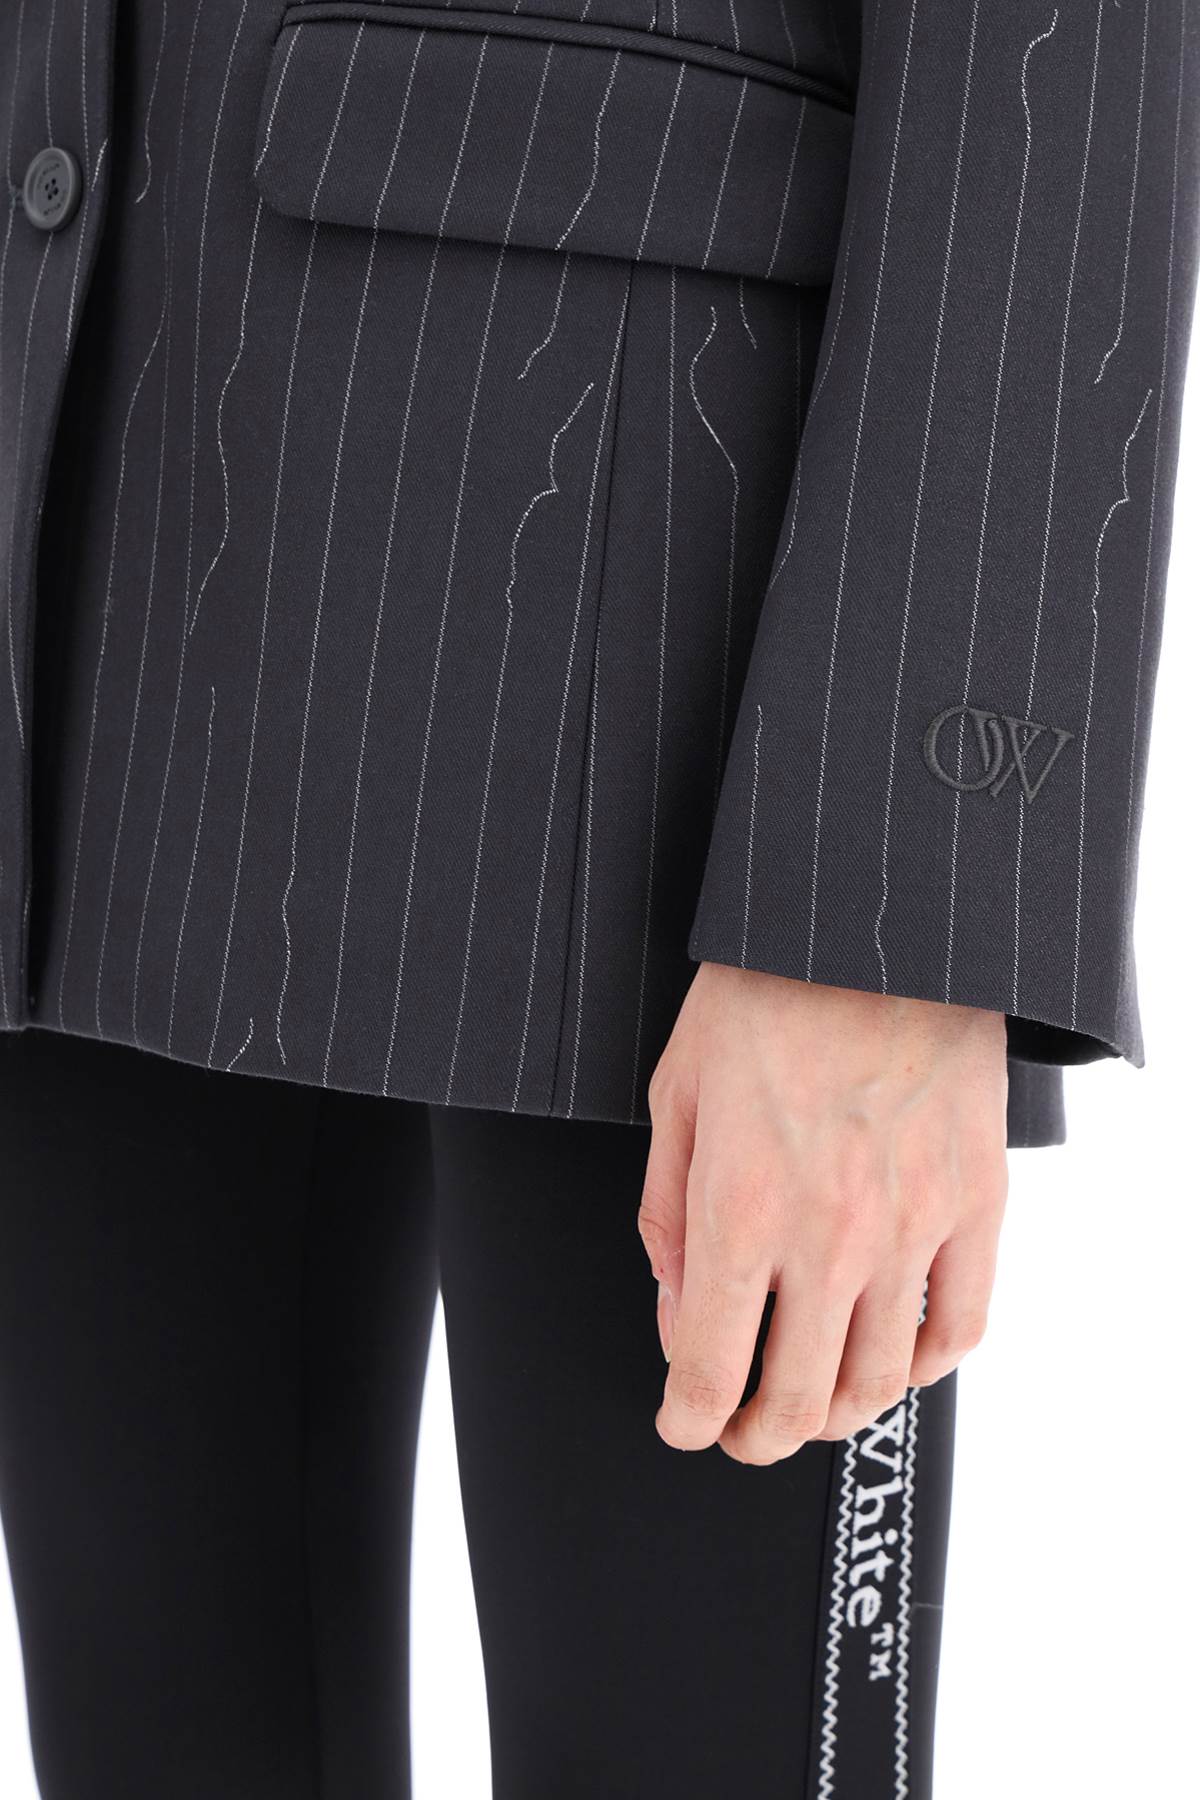 Off-white broken pinstripe pattern jacket with-3